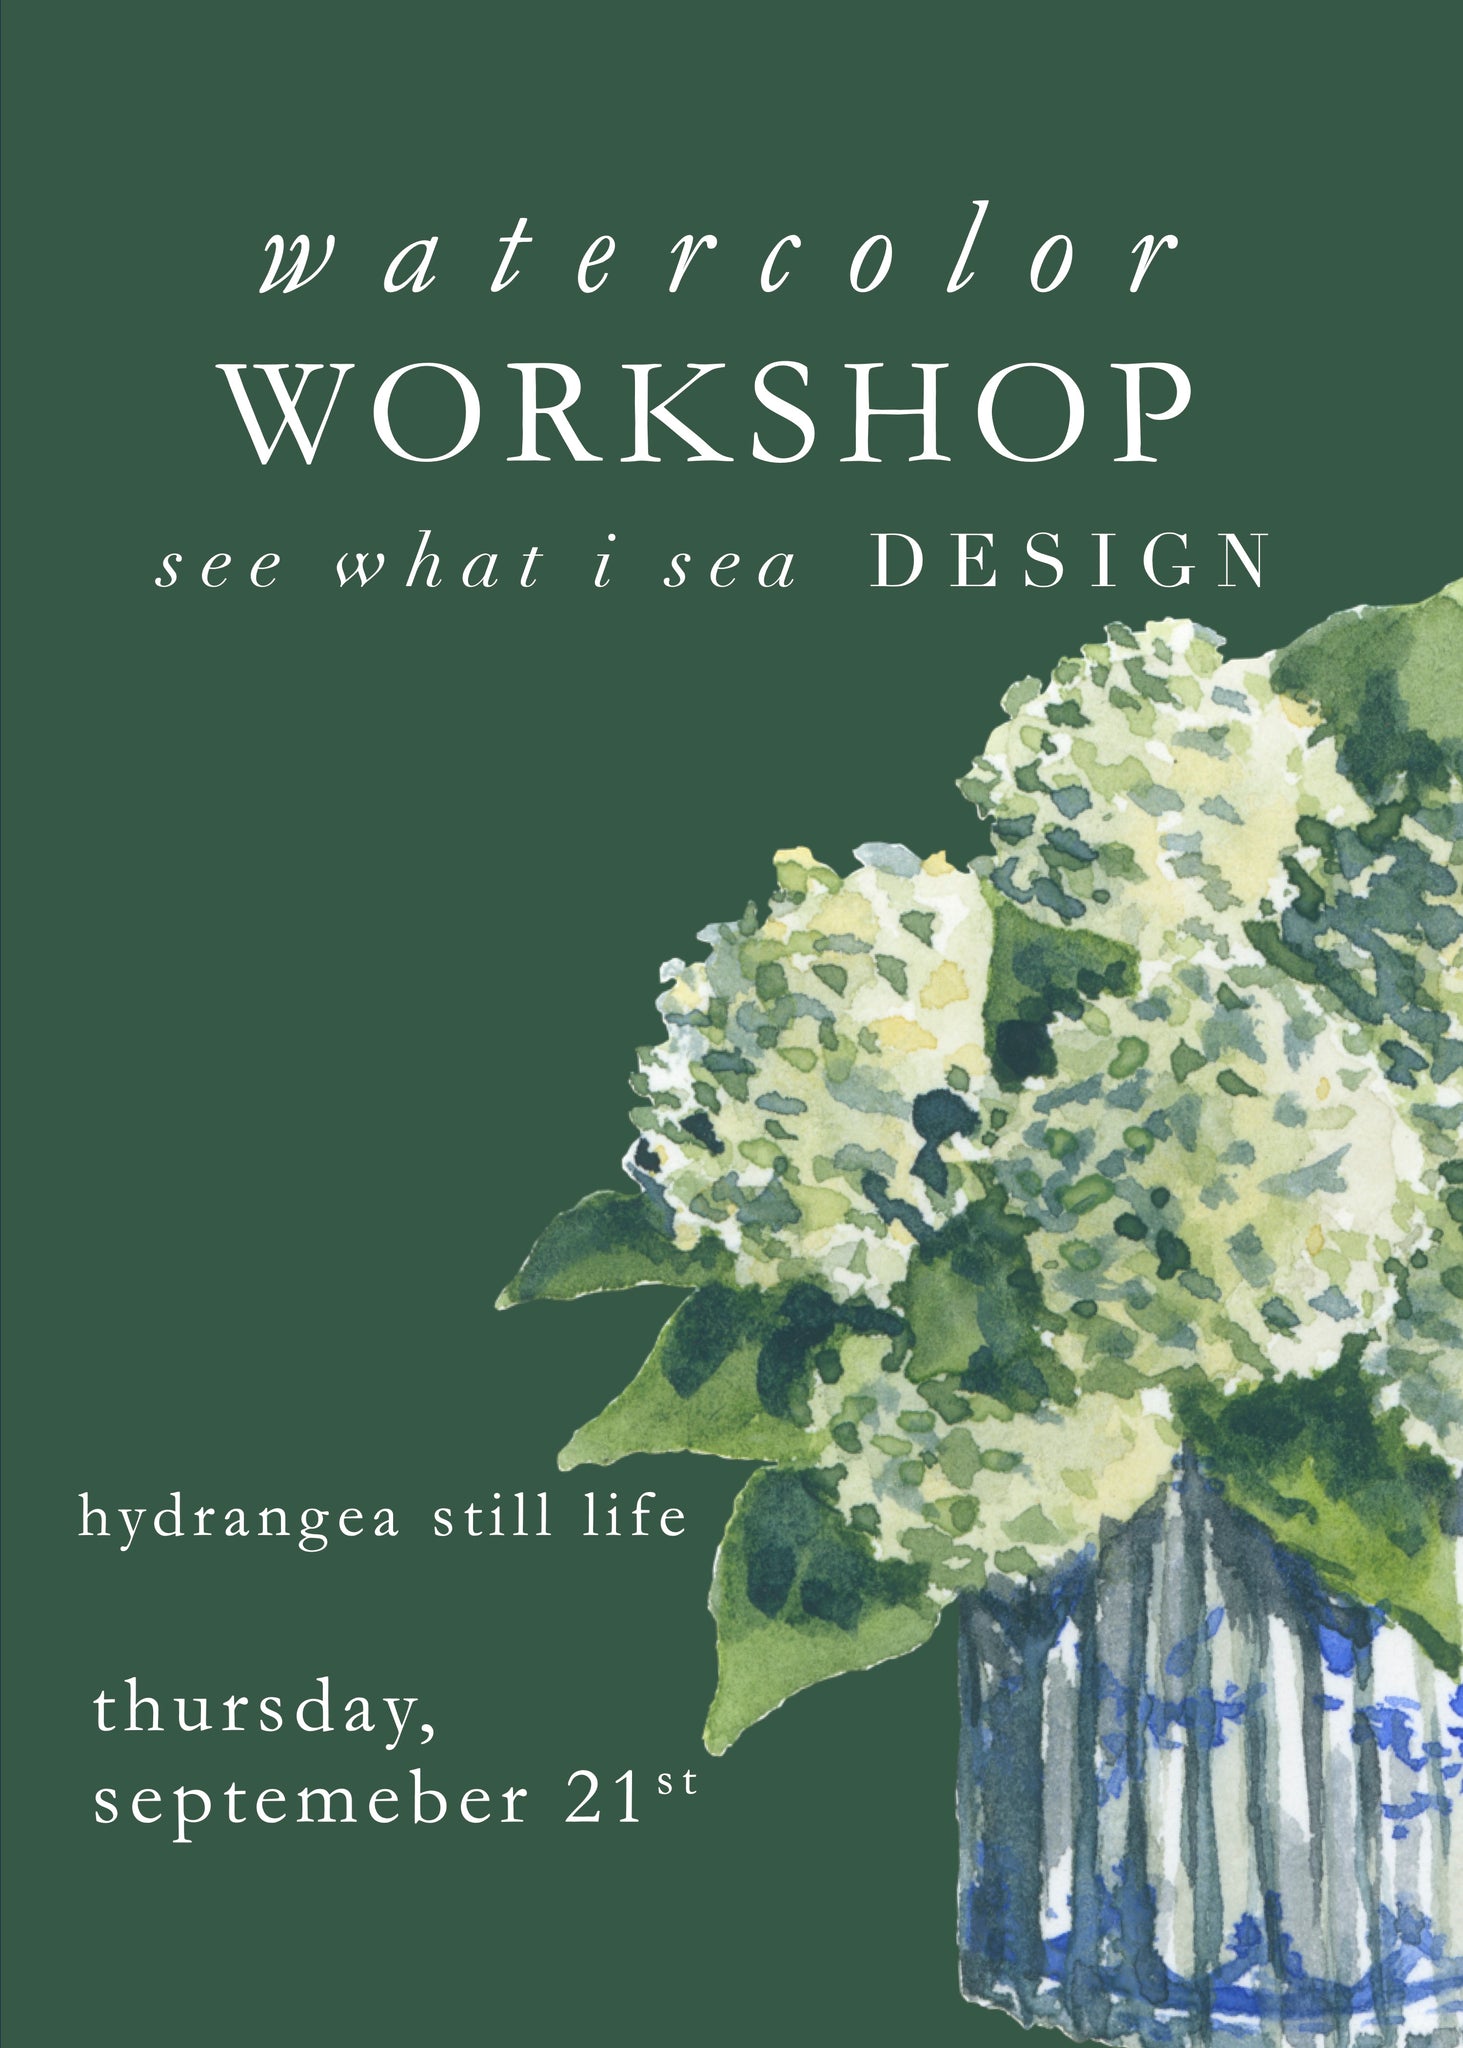 hydrangea still life || watercolor workshop